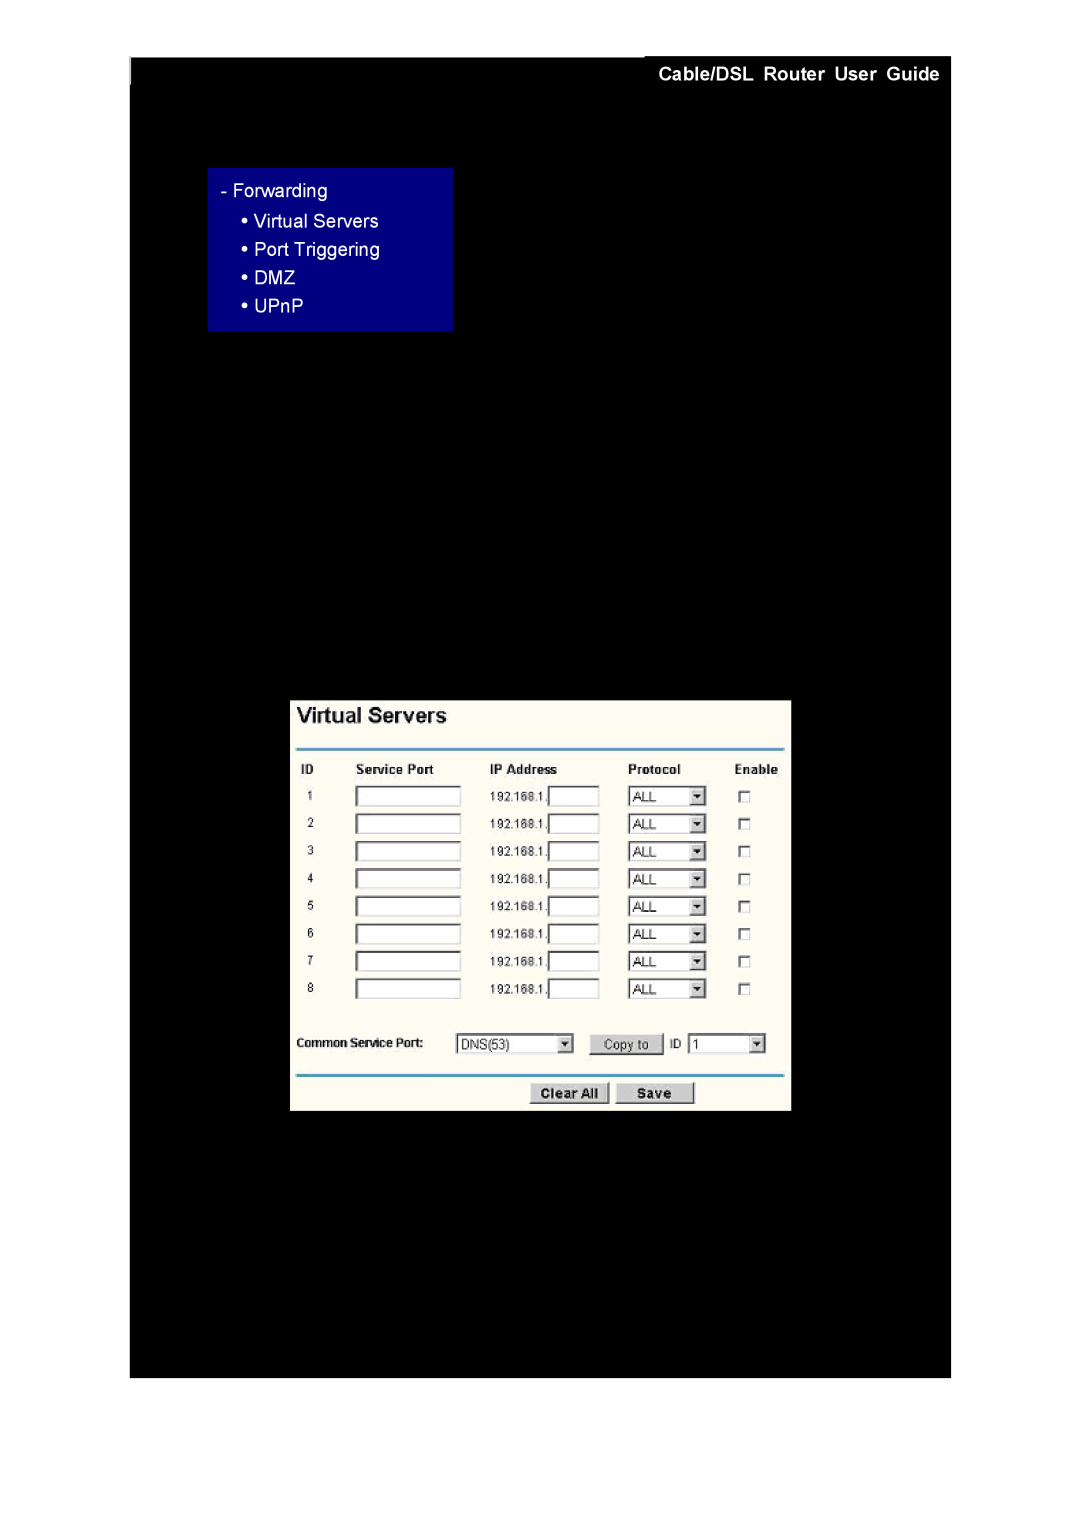 TP-Link manual 5.6Forwarding, Virtual Servers, TL-R402M Cable/DSL Router User Guide, yUPnP 